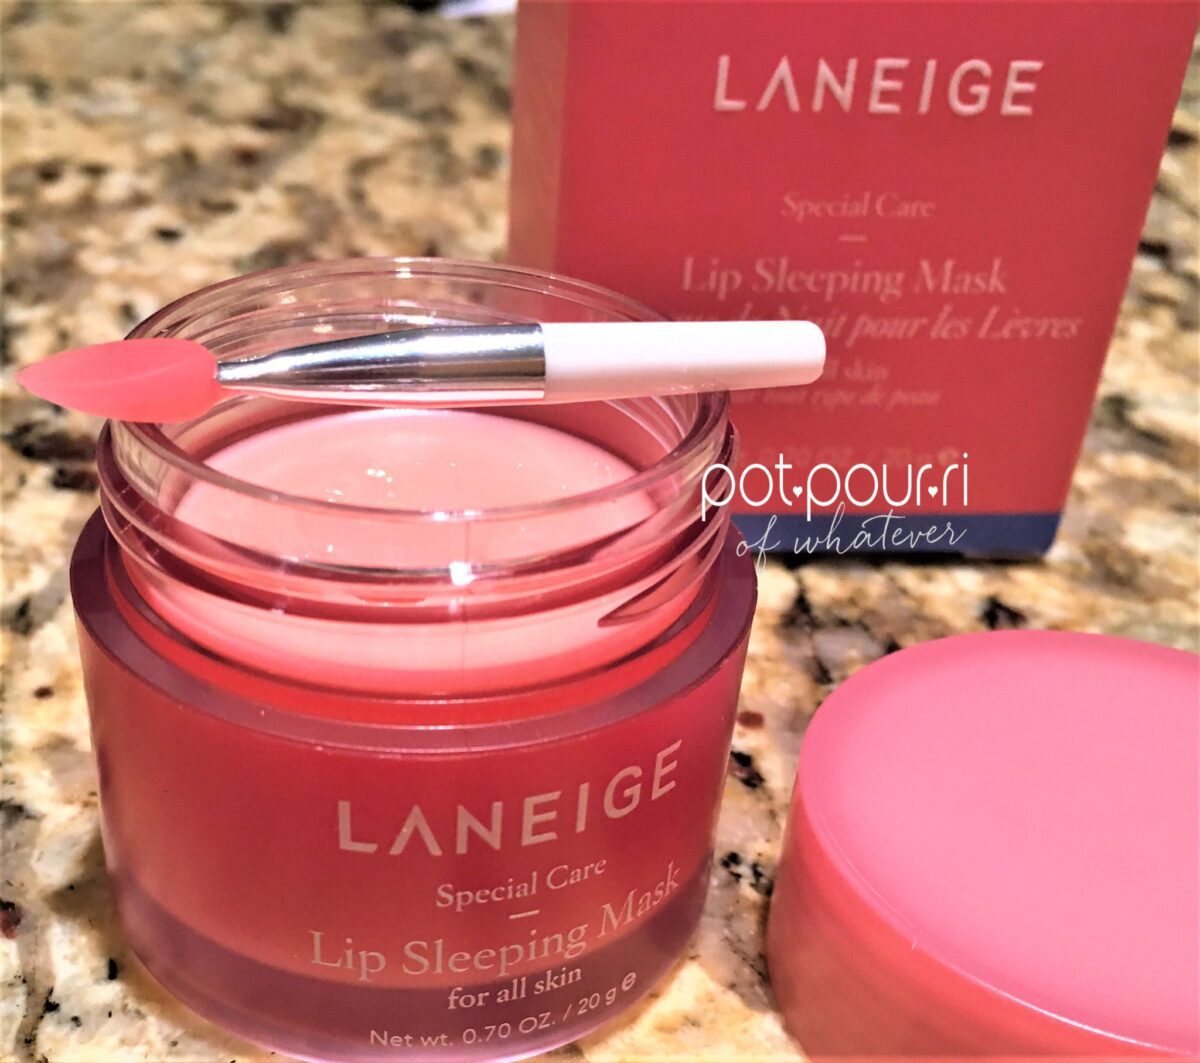 Laneige Lip Sleeping Mask Packaging box, jar and applicator wand